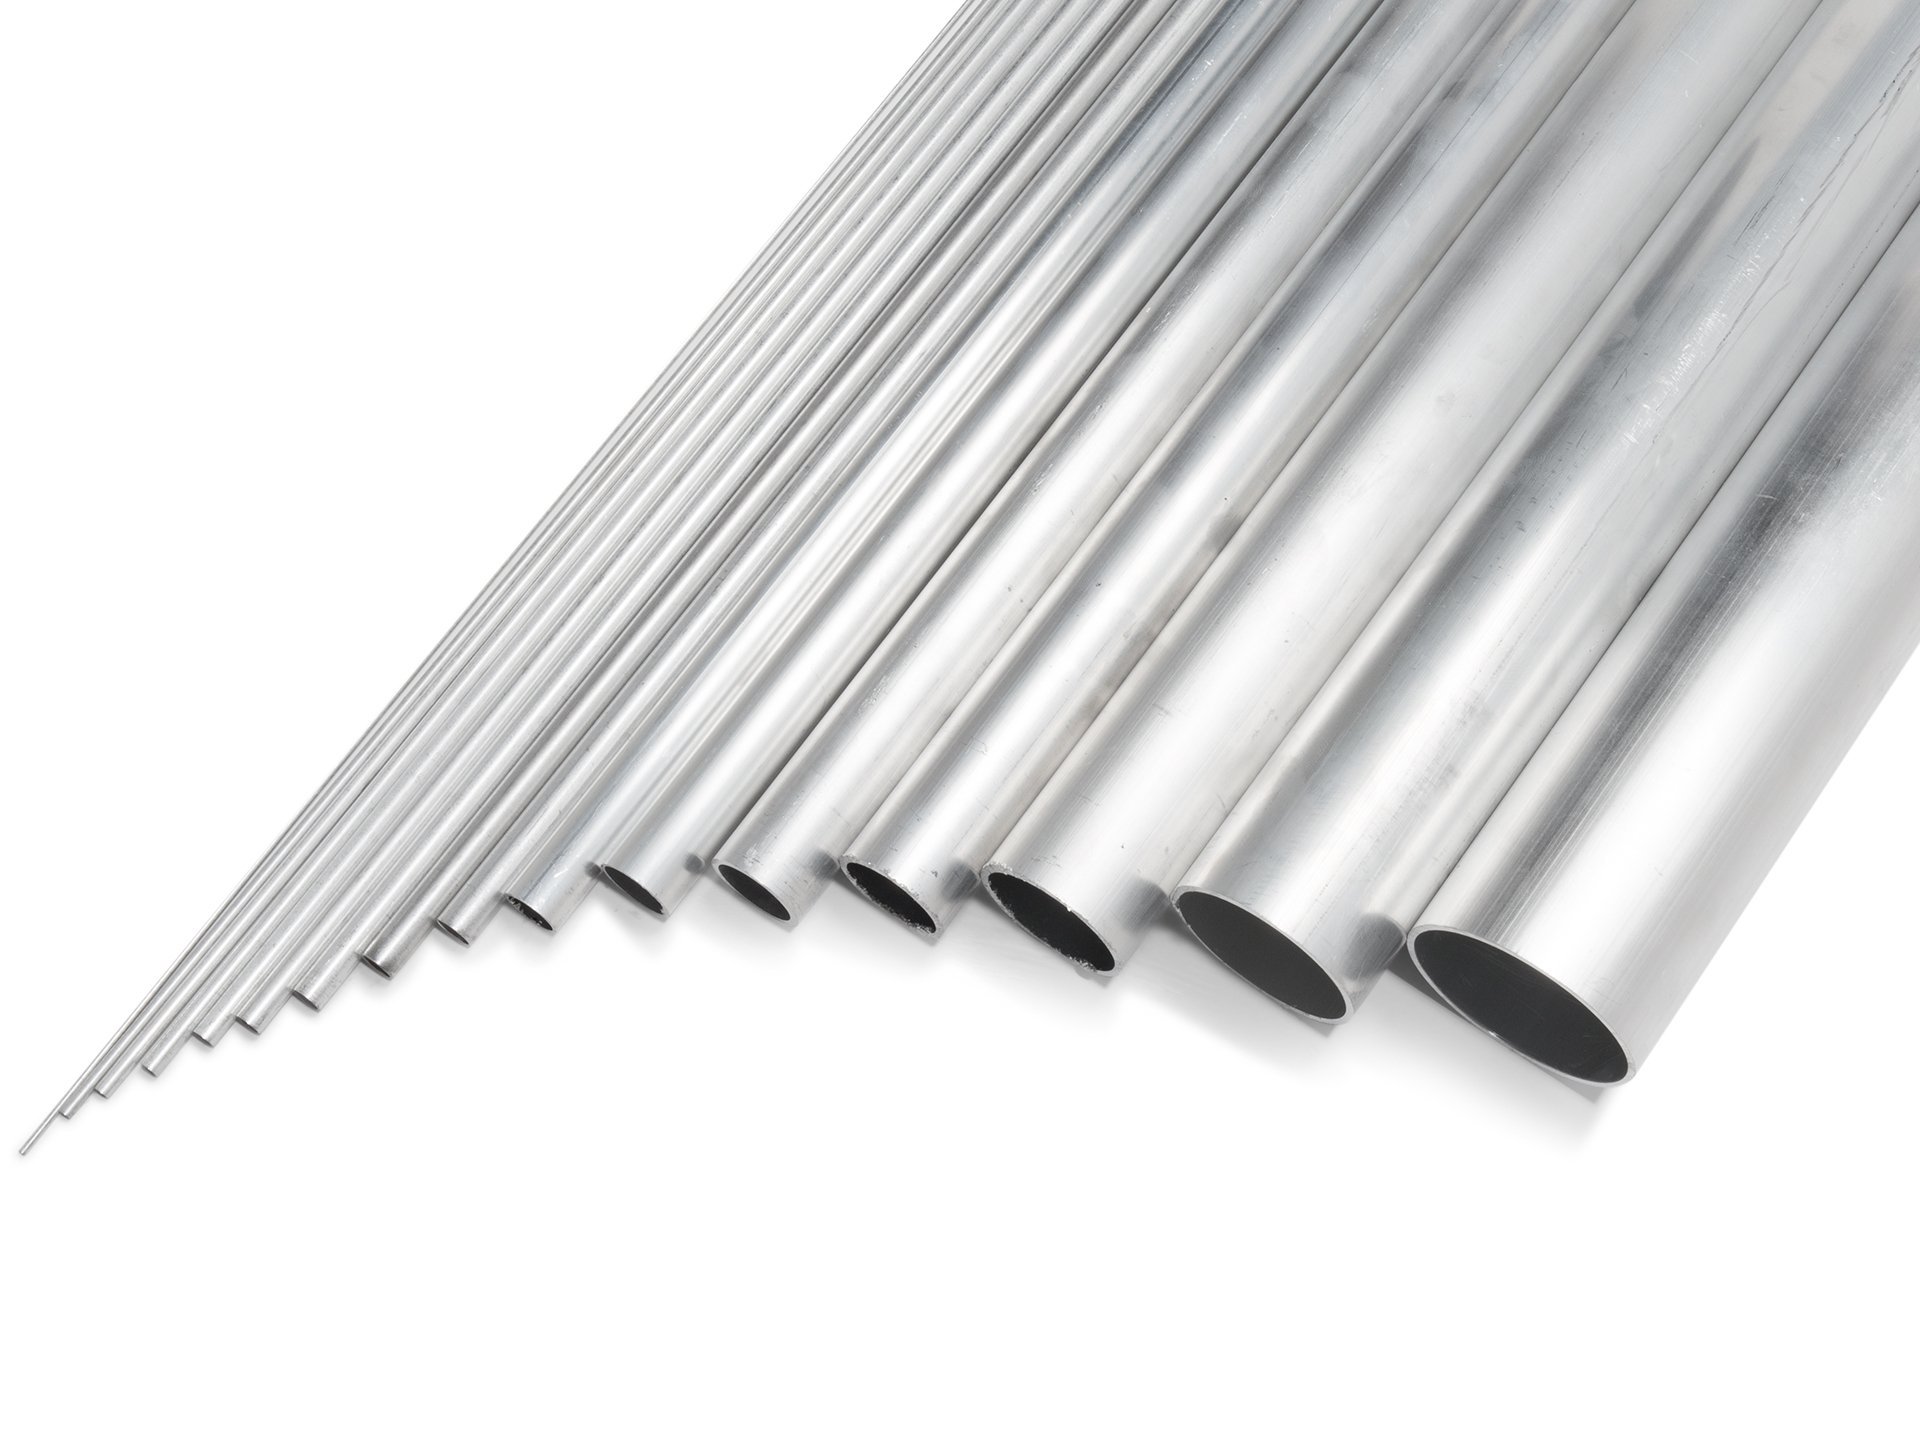 Tubo redondo de aluminio 30x1.4 mm x 2.98 metros - Promart